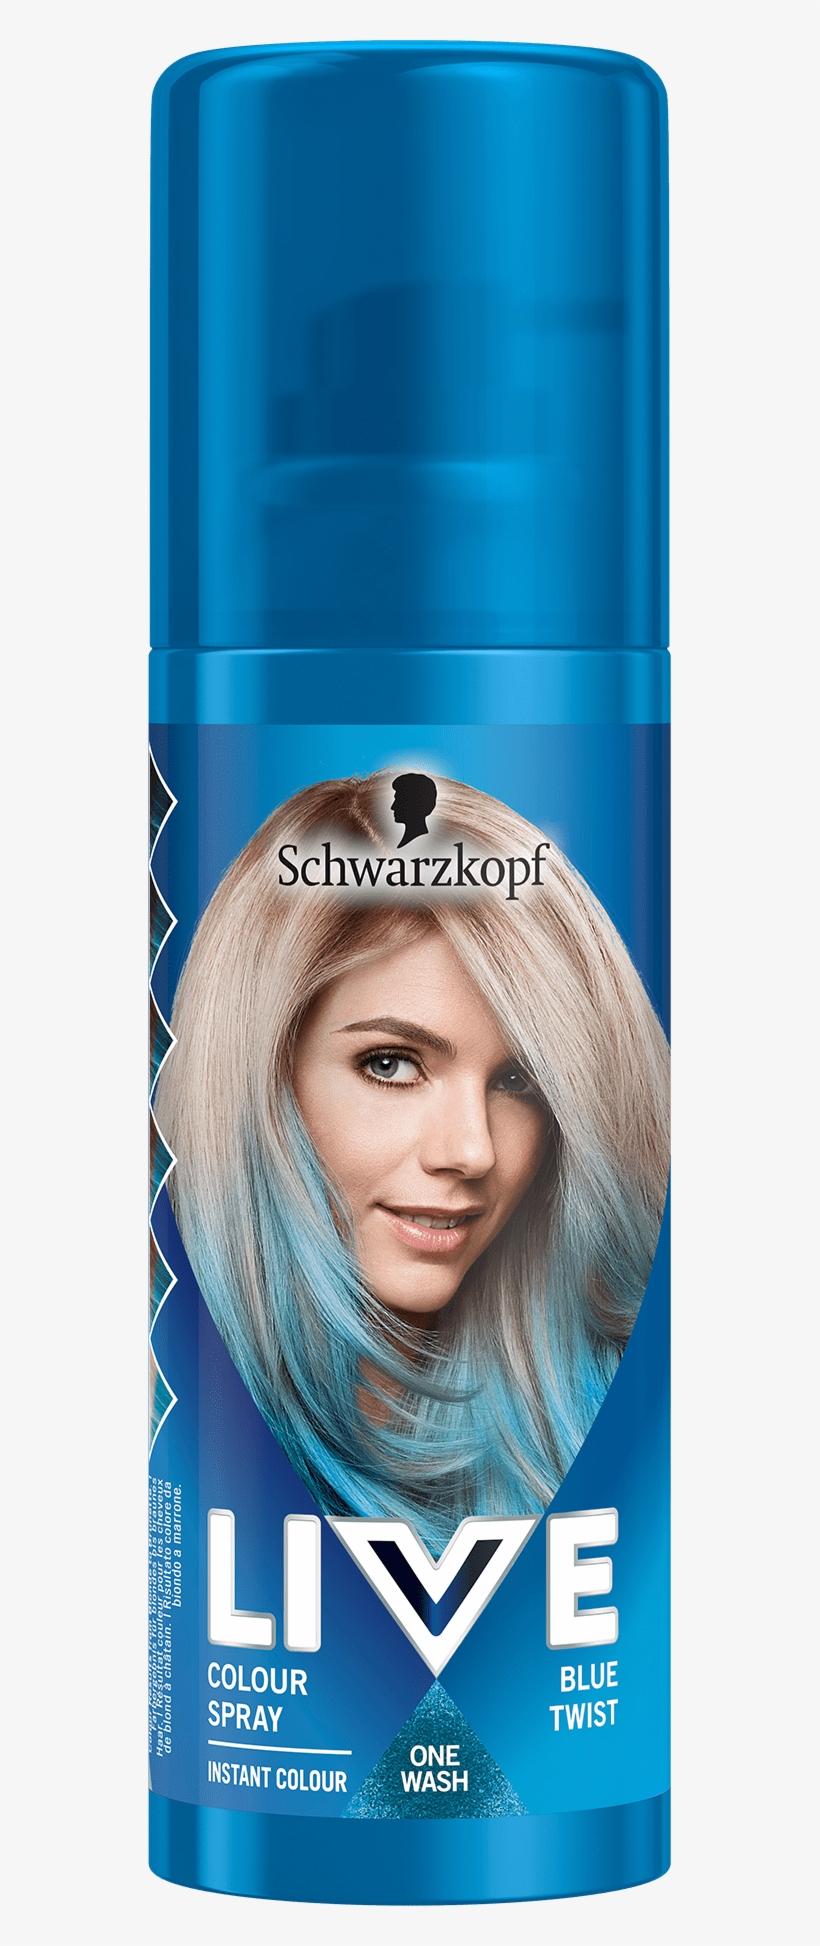 Live Colour Hair Dye From Schwarzkopf - Schwarzkopf Live Spray Blue, transparent png #5983495